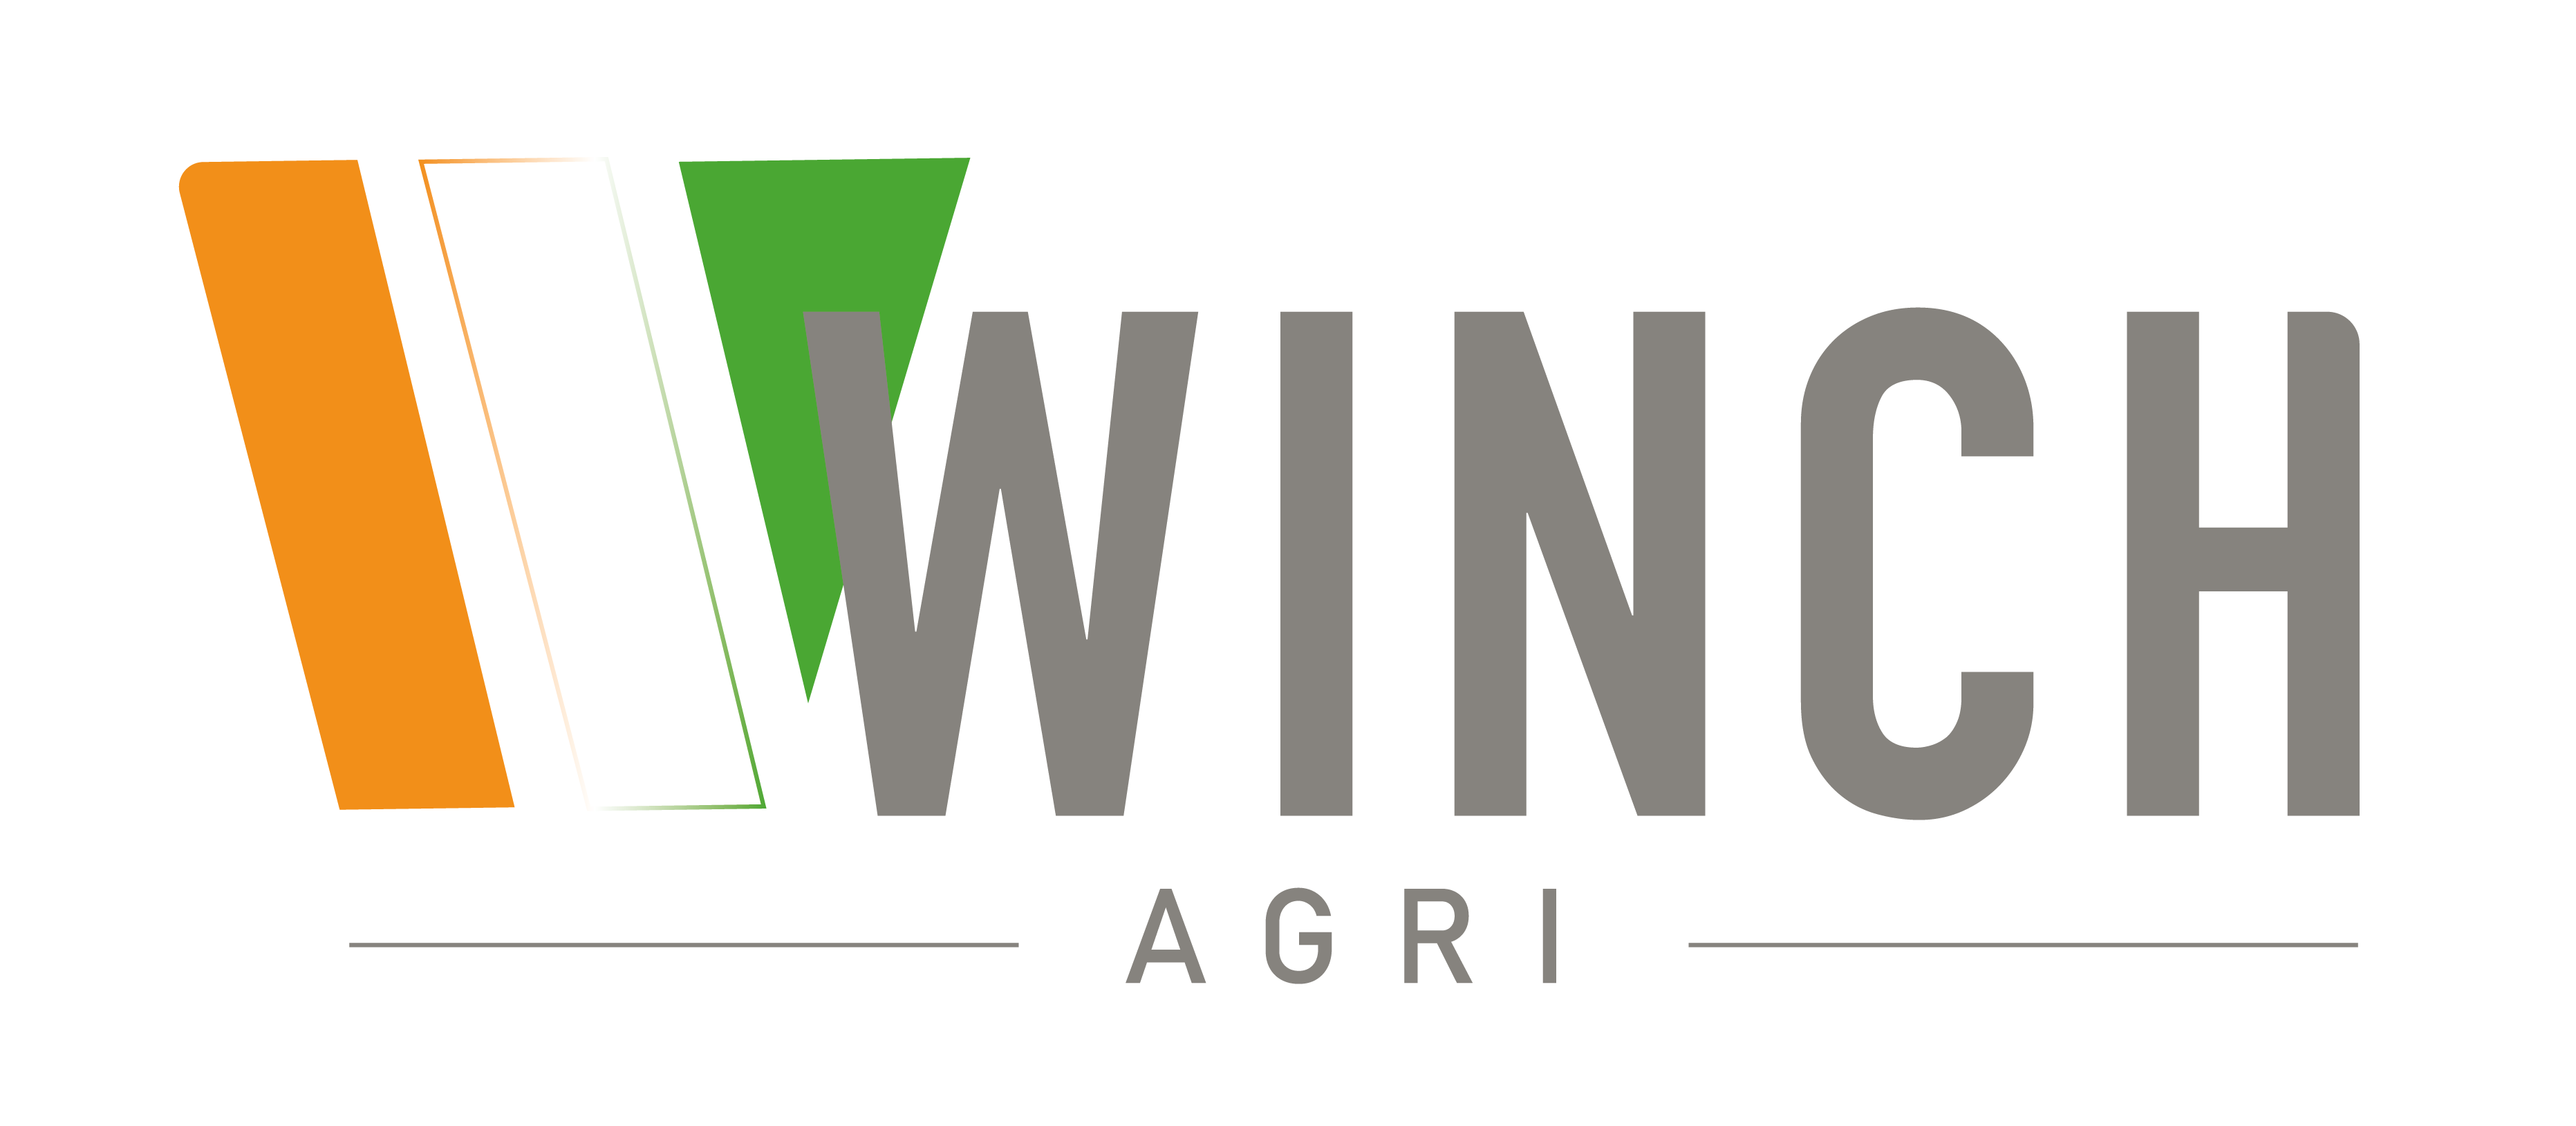 Le logo de winch agri